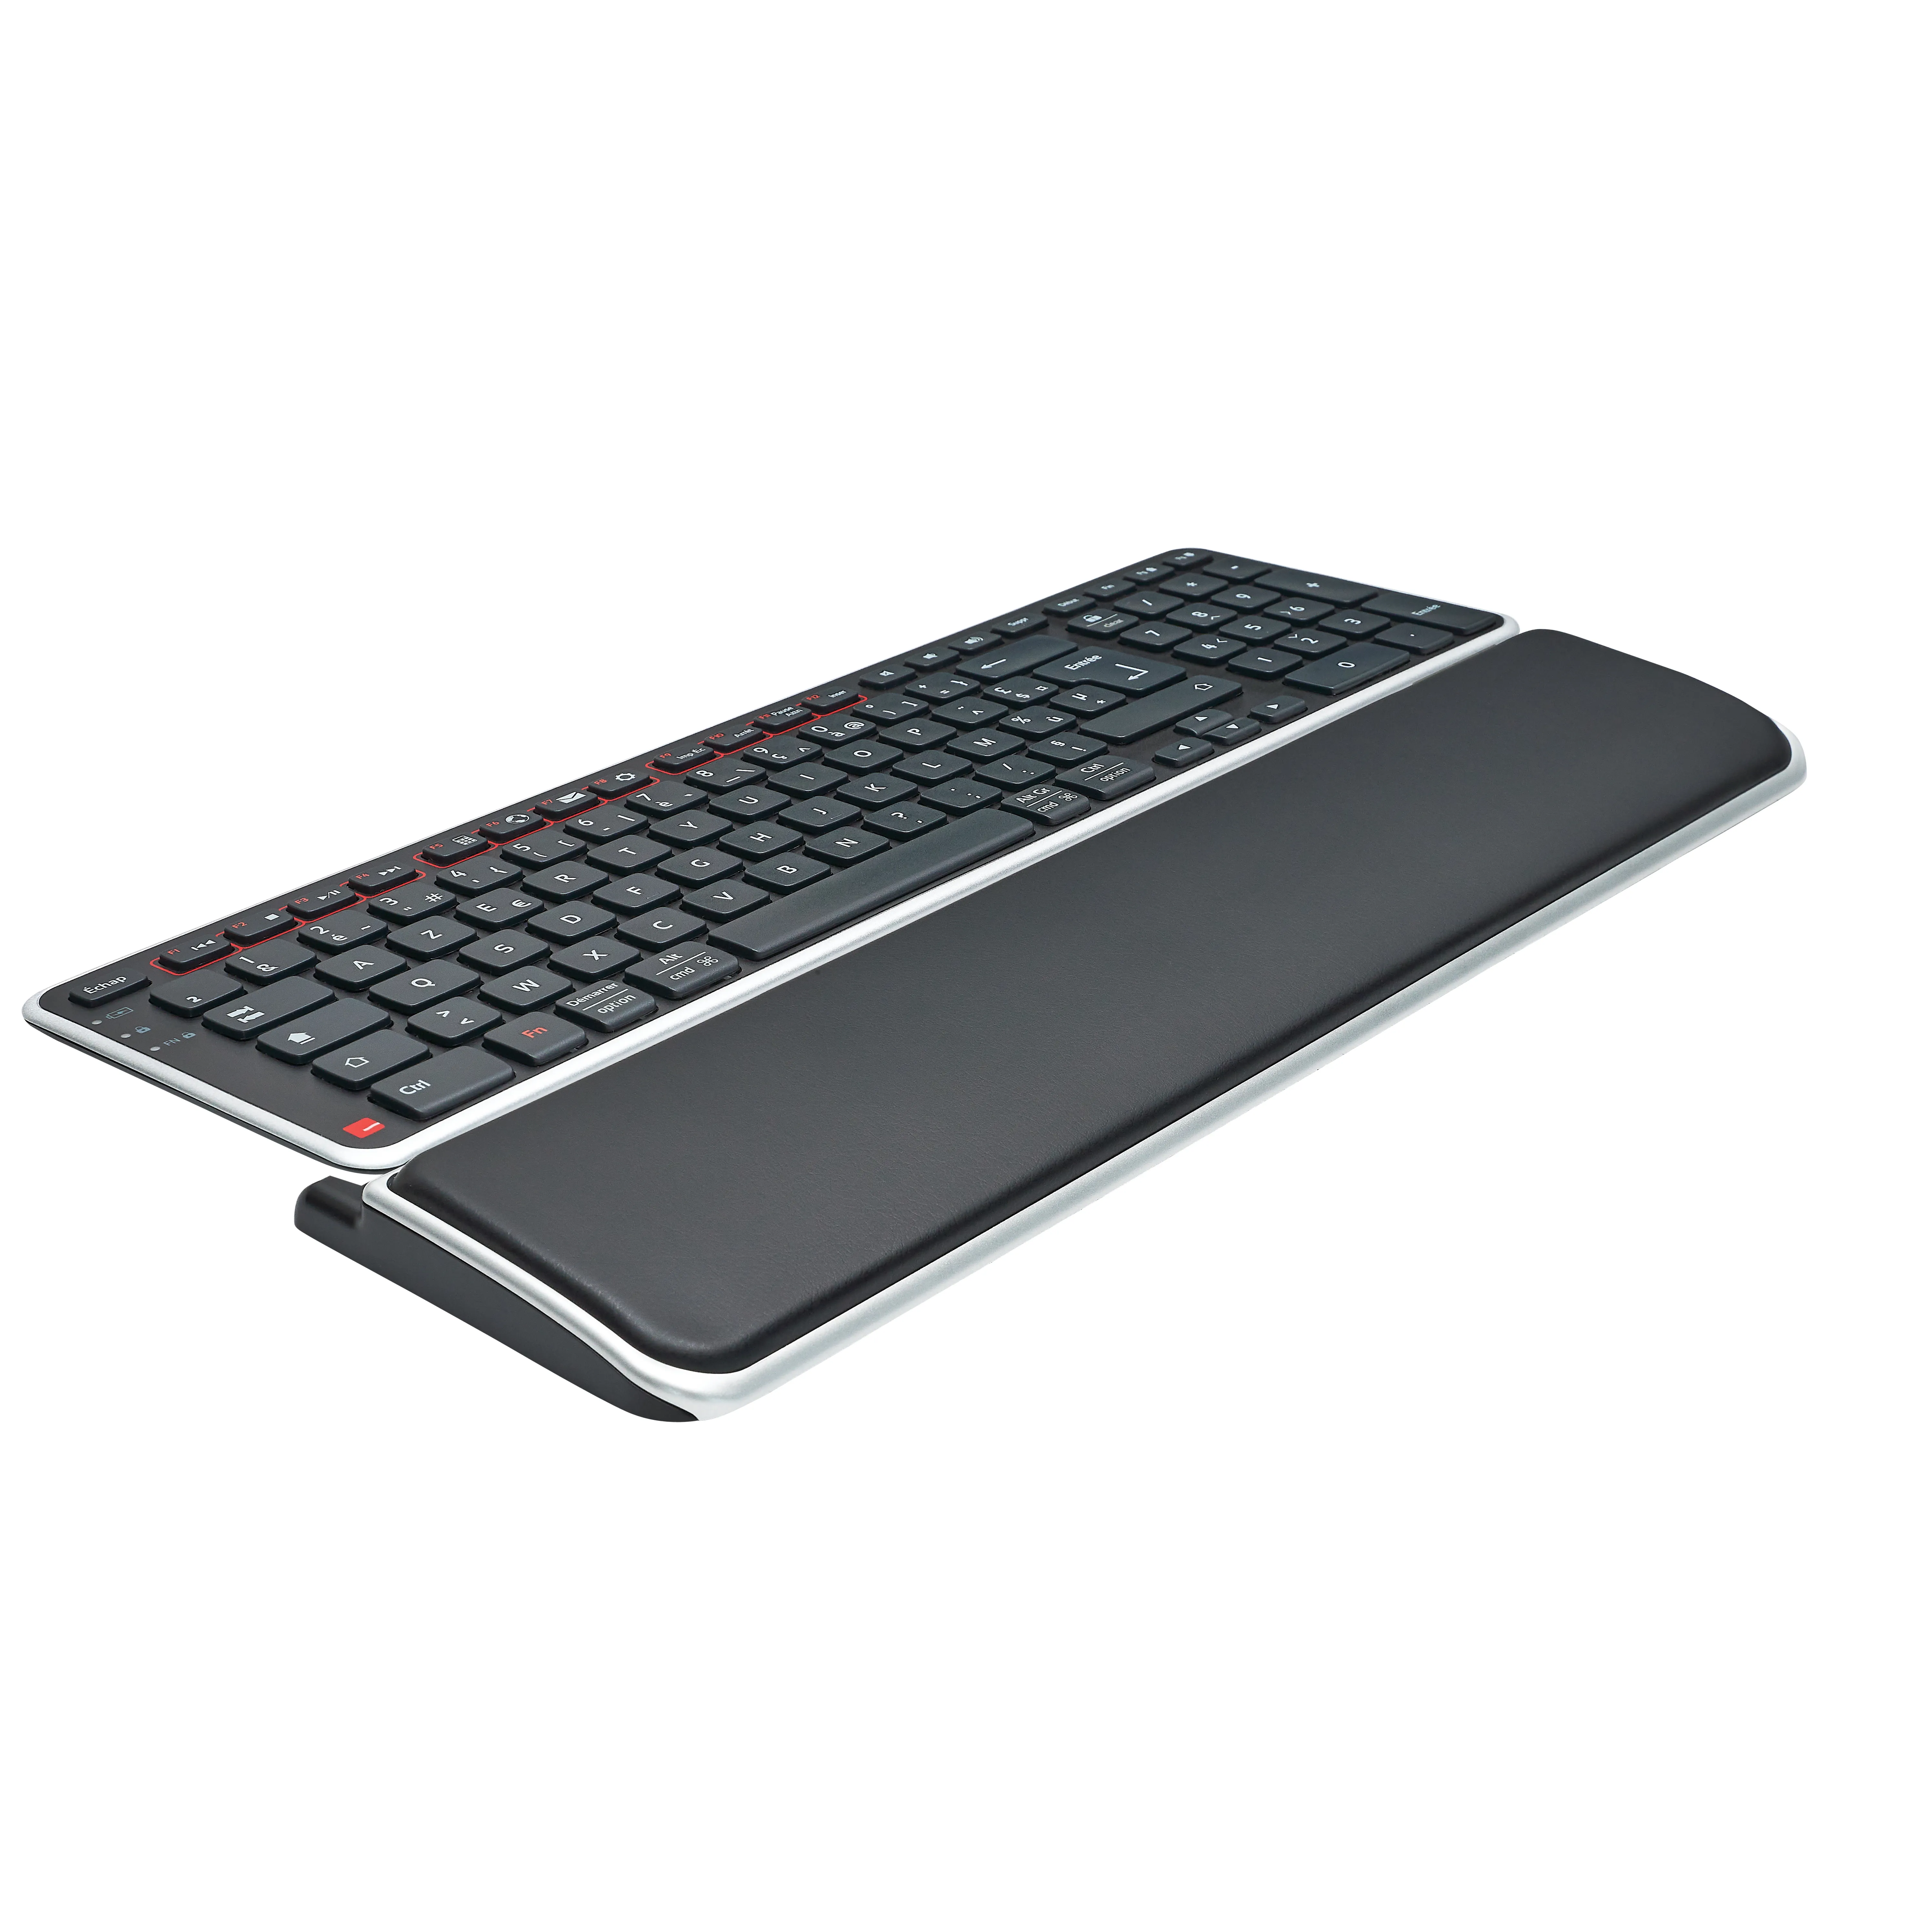 Revendeur officiel Tapis Contour Design Balance Keyboard Wrist Rest